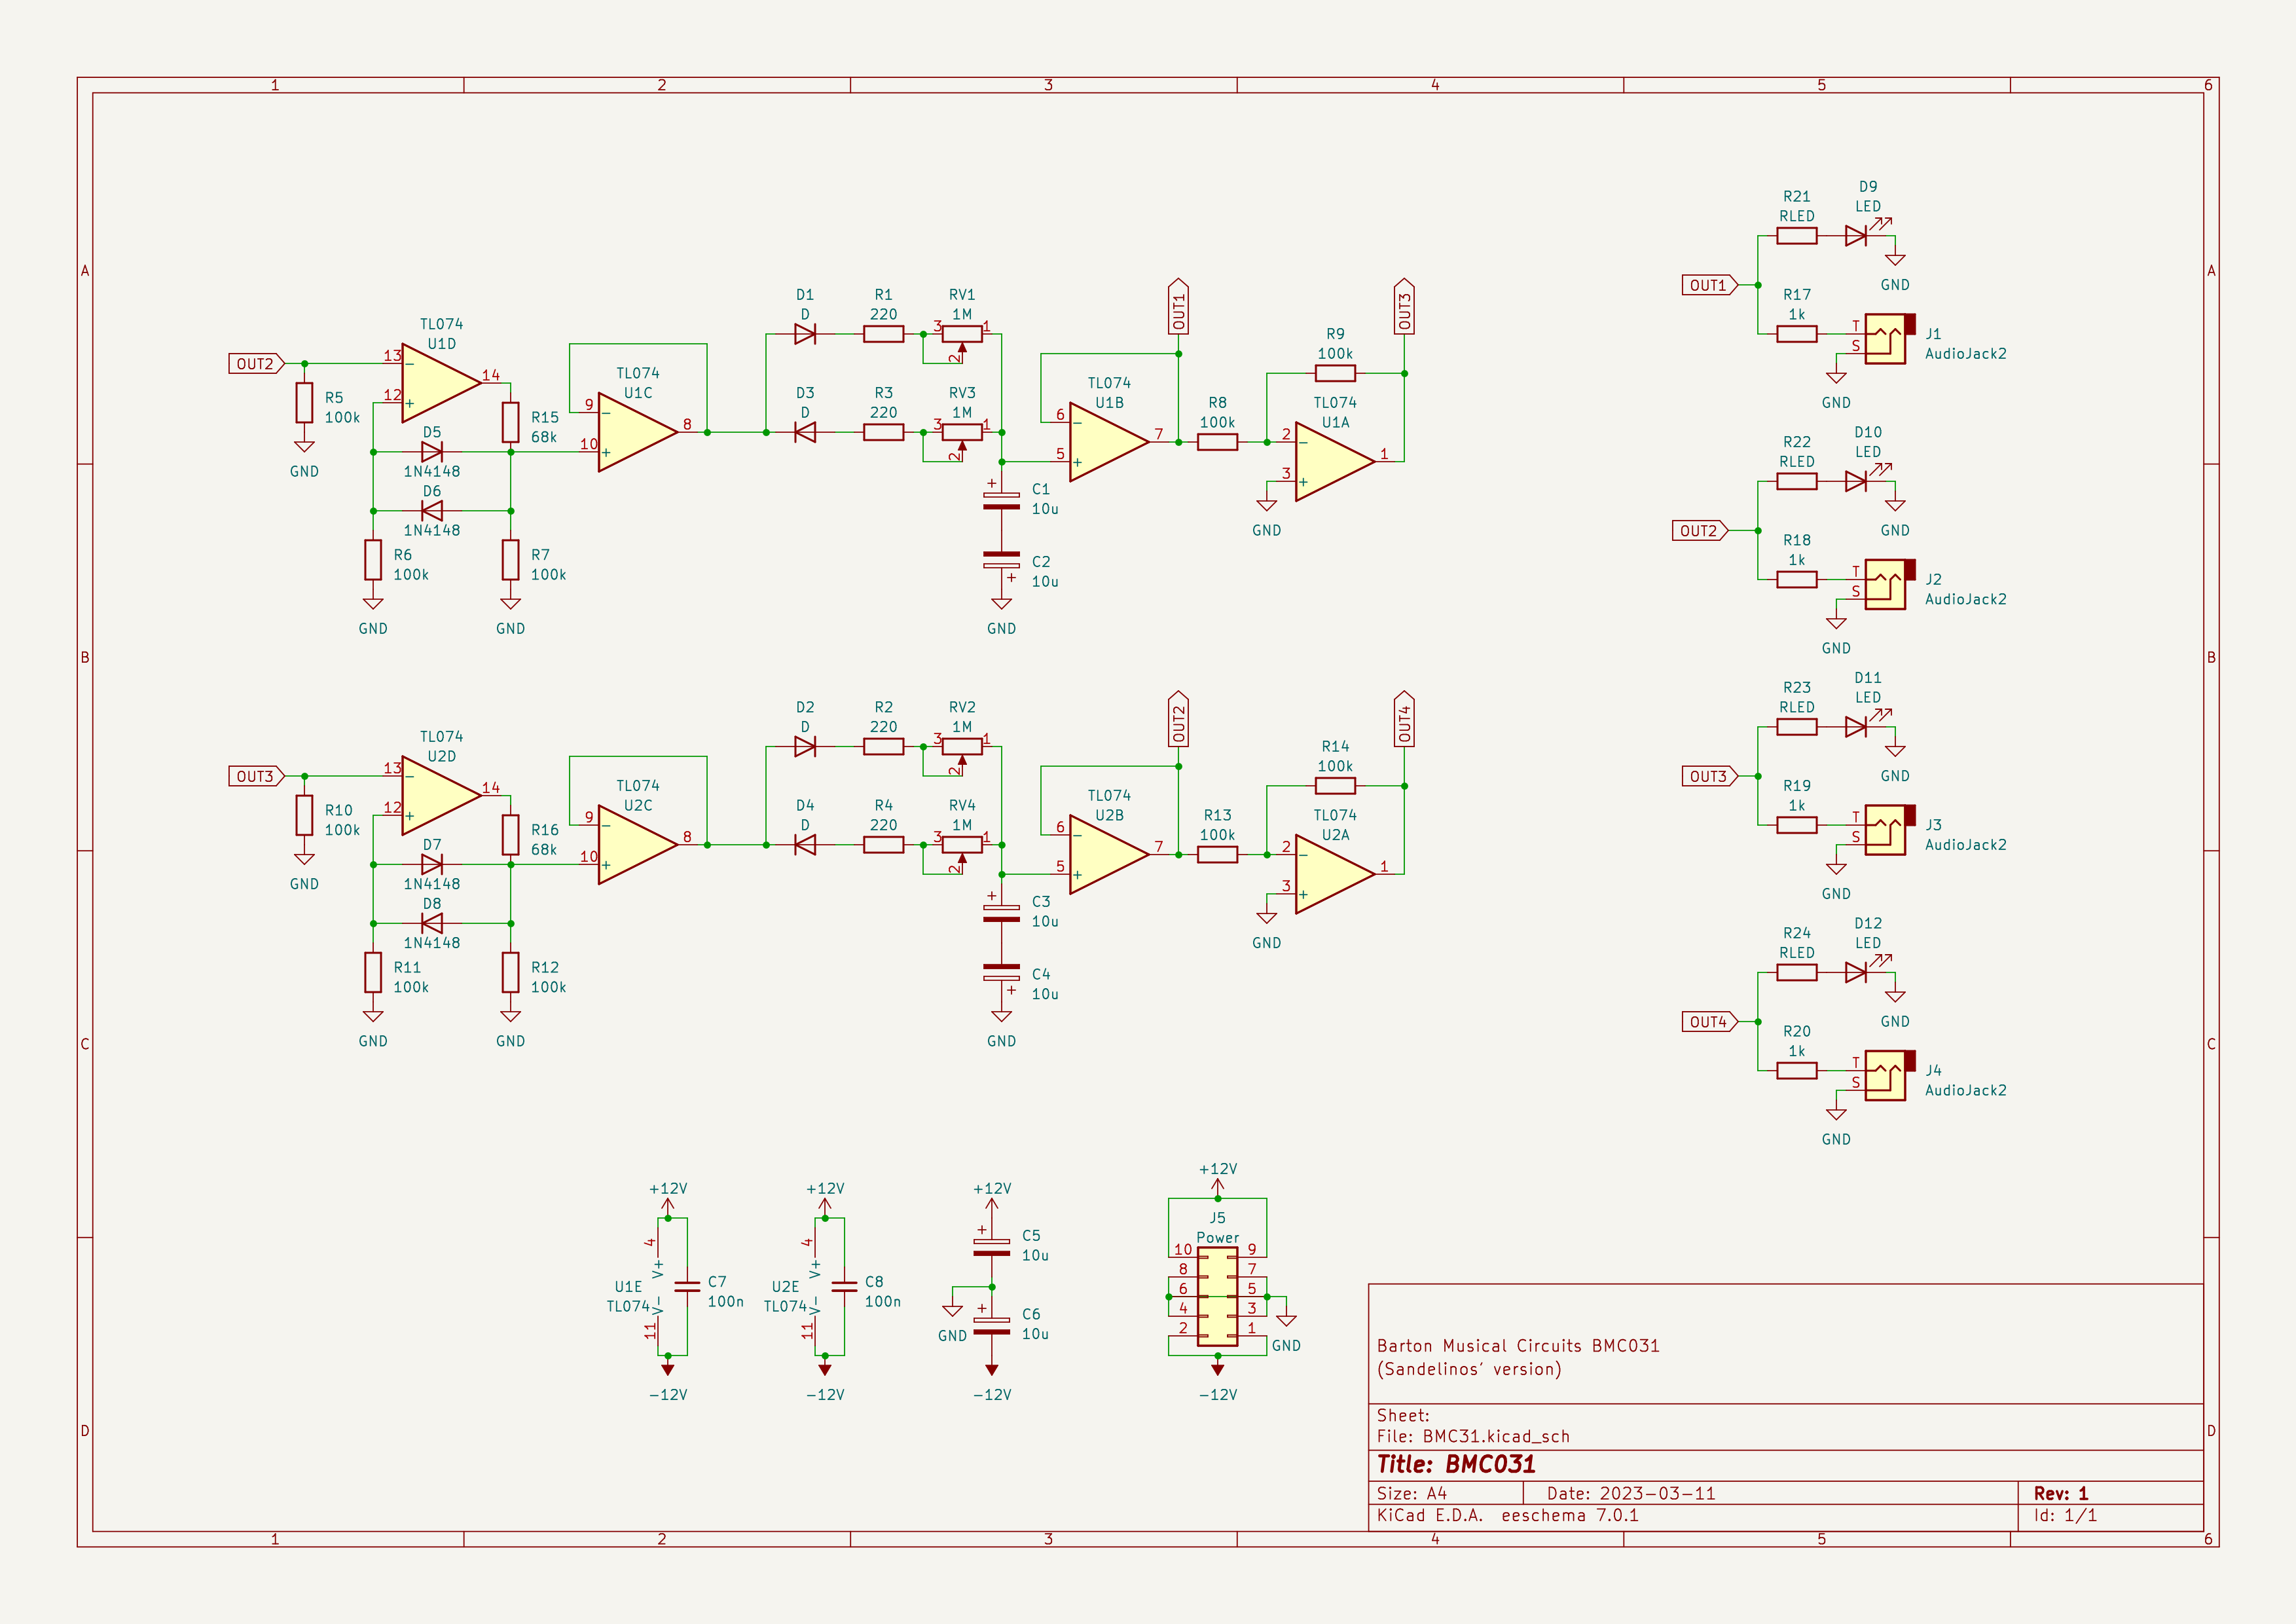 My version of the BMC31 schematic